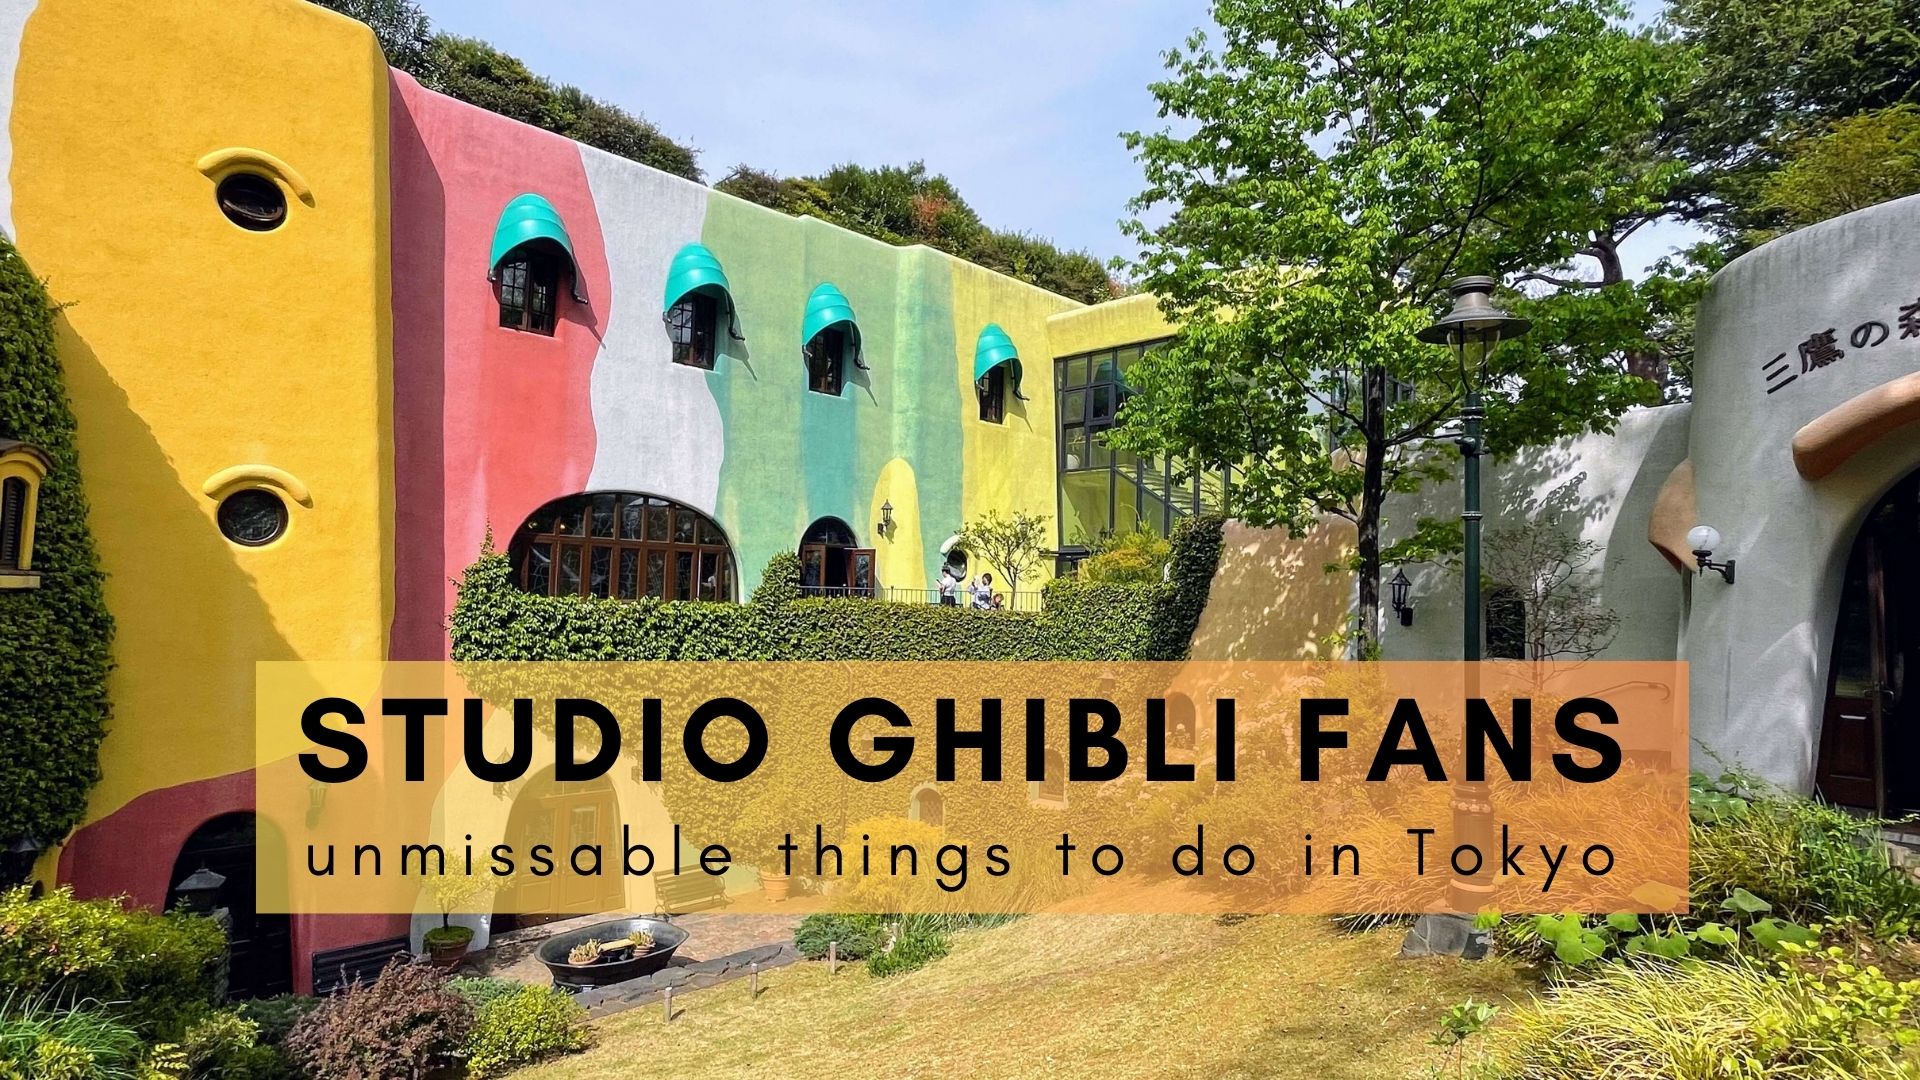 Totoro Ghibli-themed things to do in Tokyo. Tokyo Ghibli, Ghibli museum in Mitaka, Shirohige cream puffs, Totoro forest, Village Vanguard, Studio Ghibli Tokyo activities, Ghibli things to do in Tokyo, cover